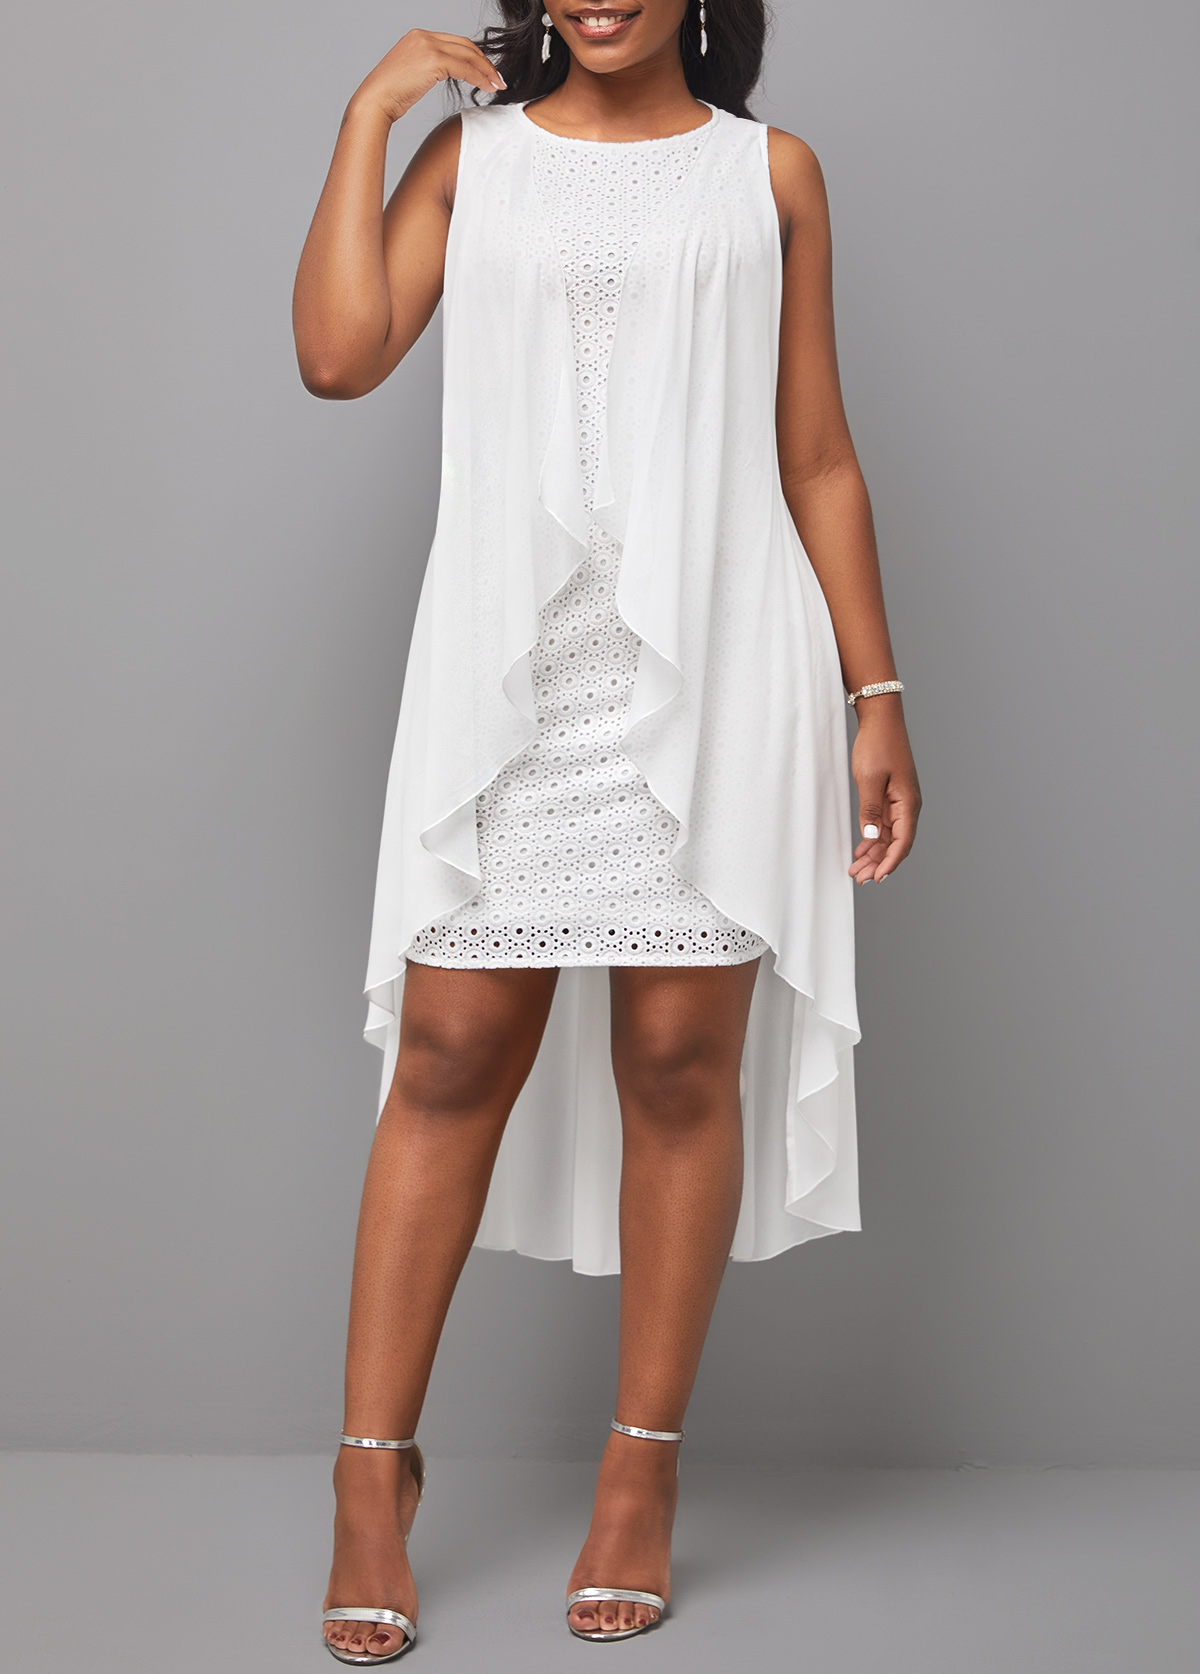 Plus Size White Cut Out High Low Dress